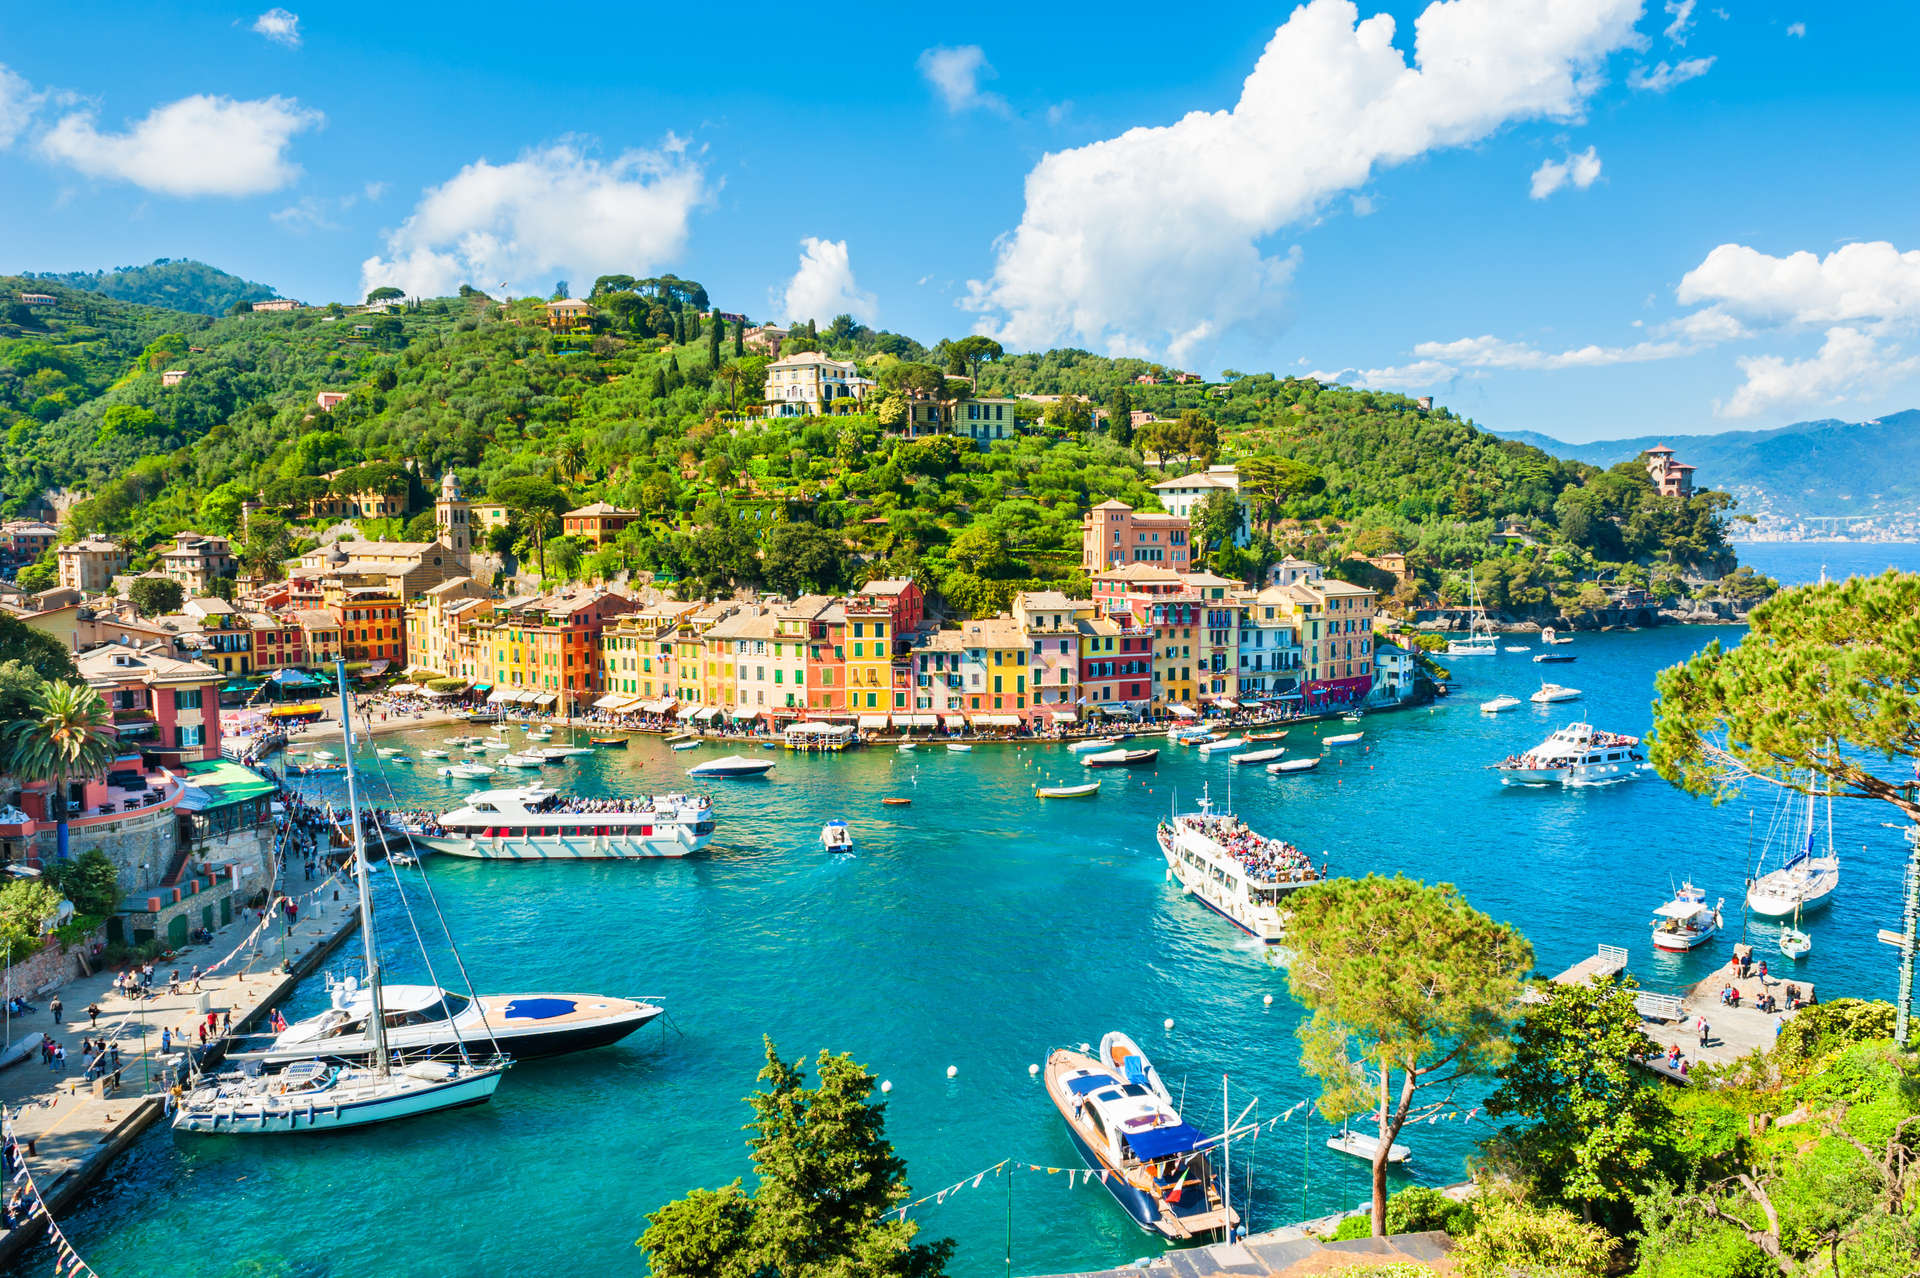 Superbe Portofino avec ses habitations en terre cuite et son port